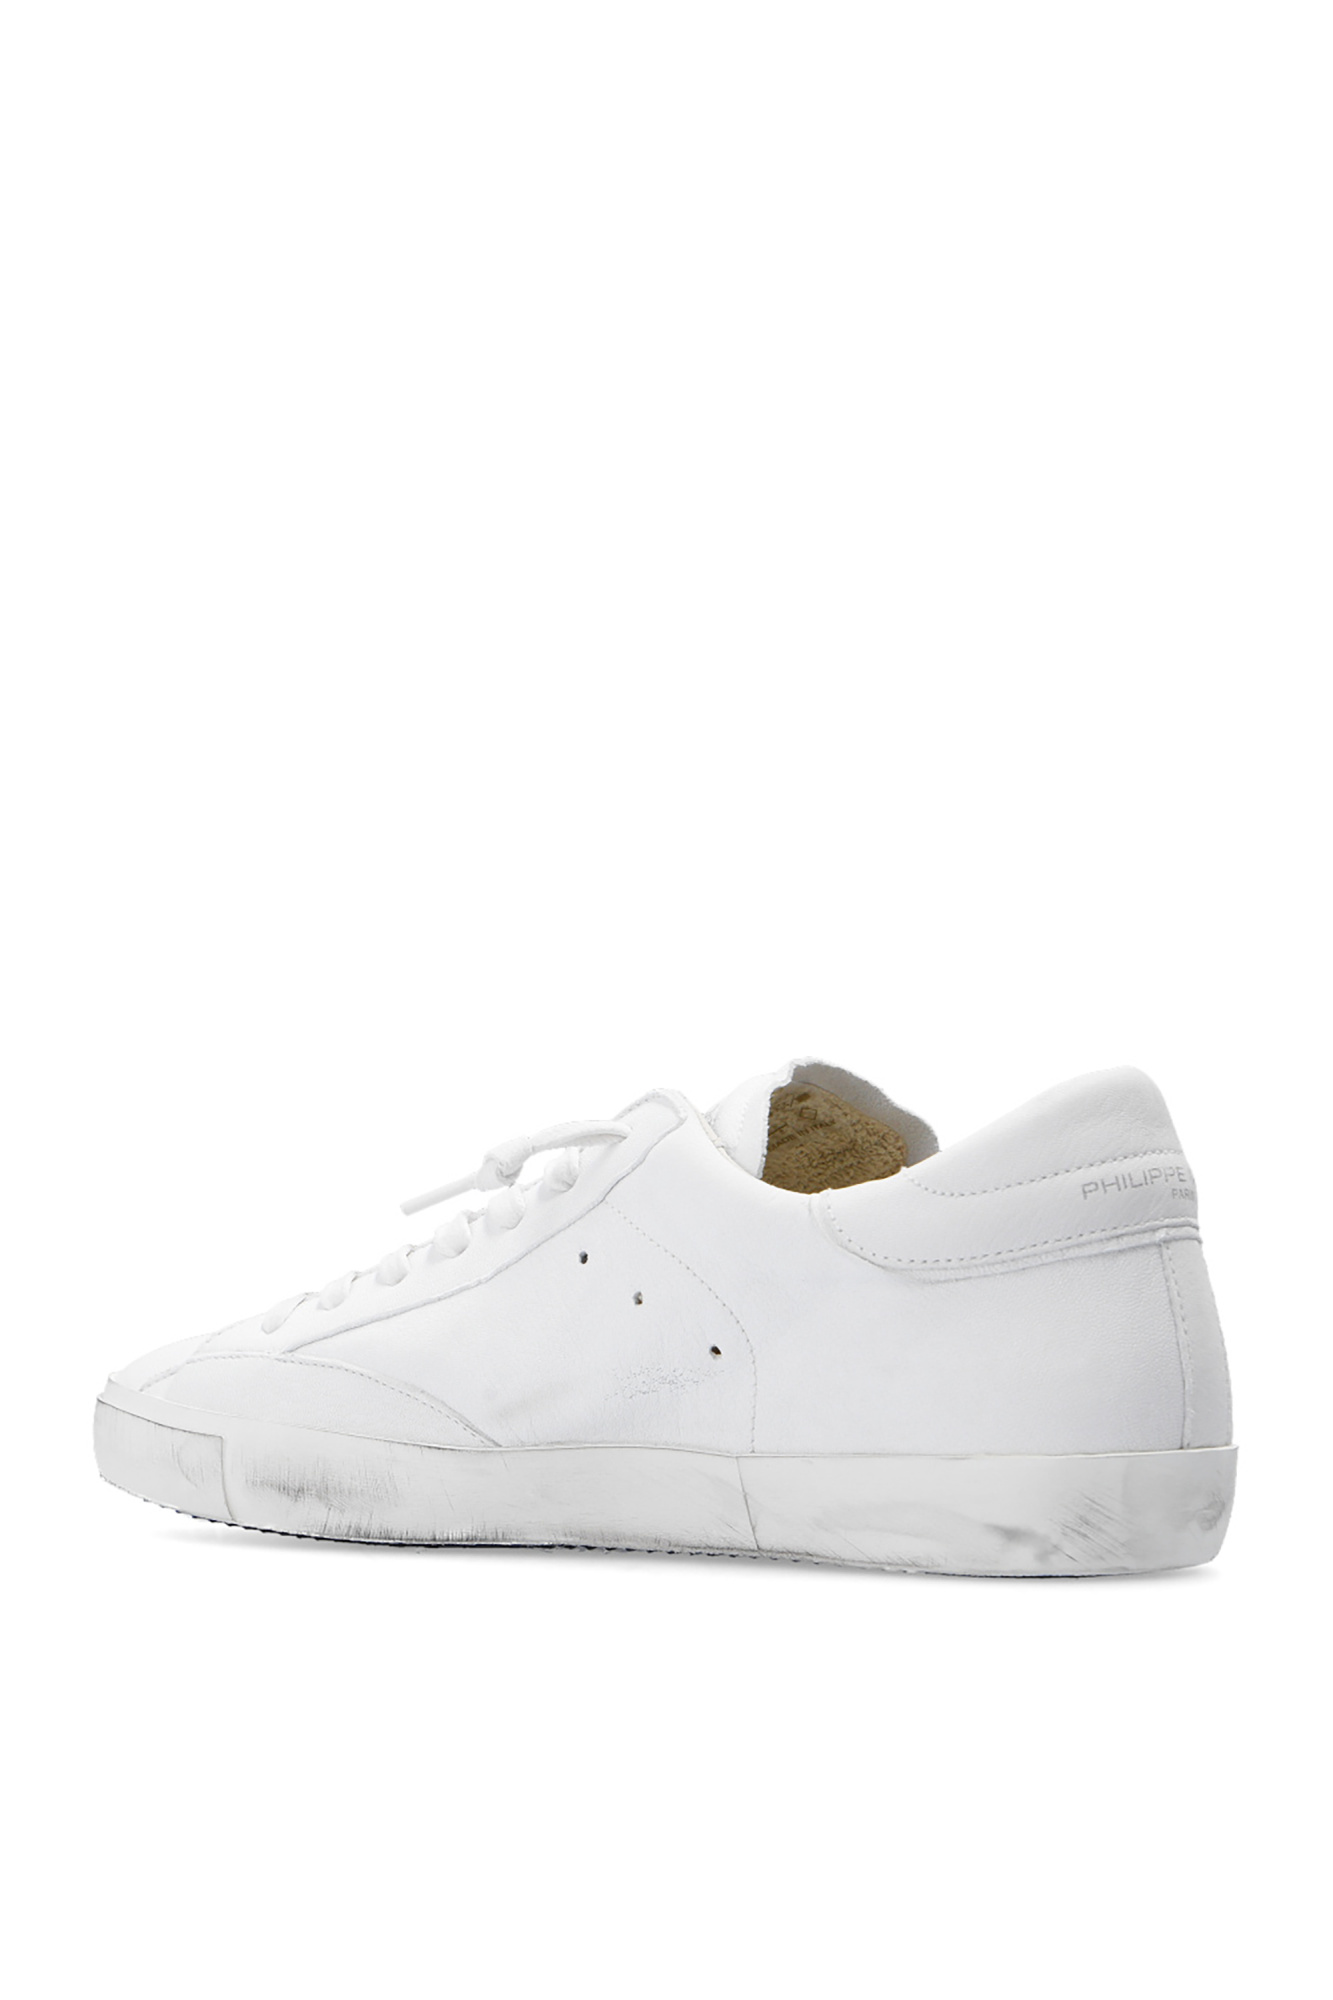 Philippe Model 'adidas nmd r1 black white mens economy shoes